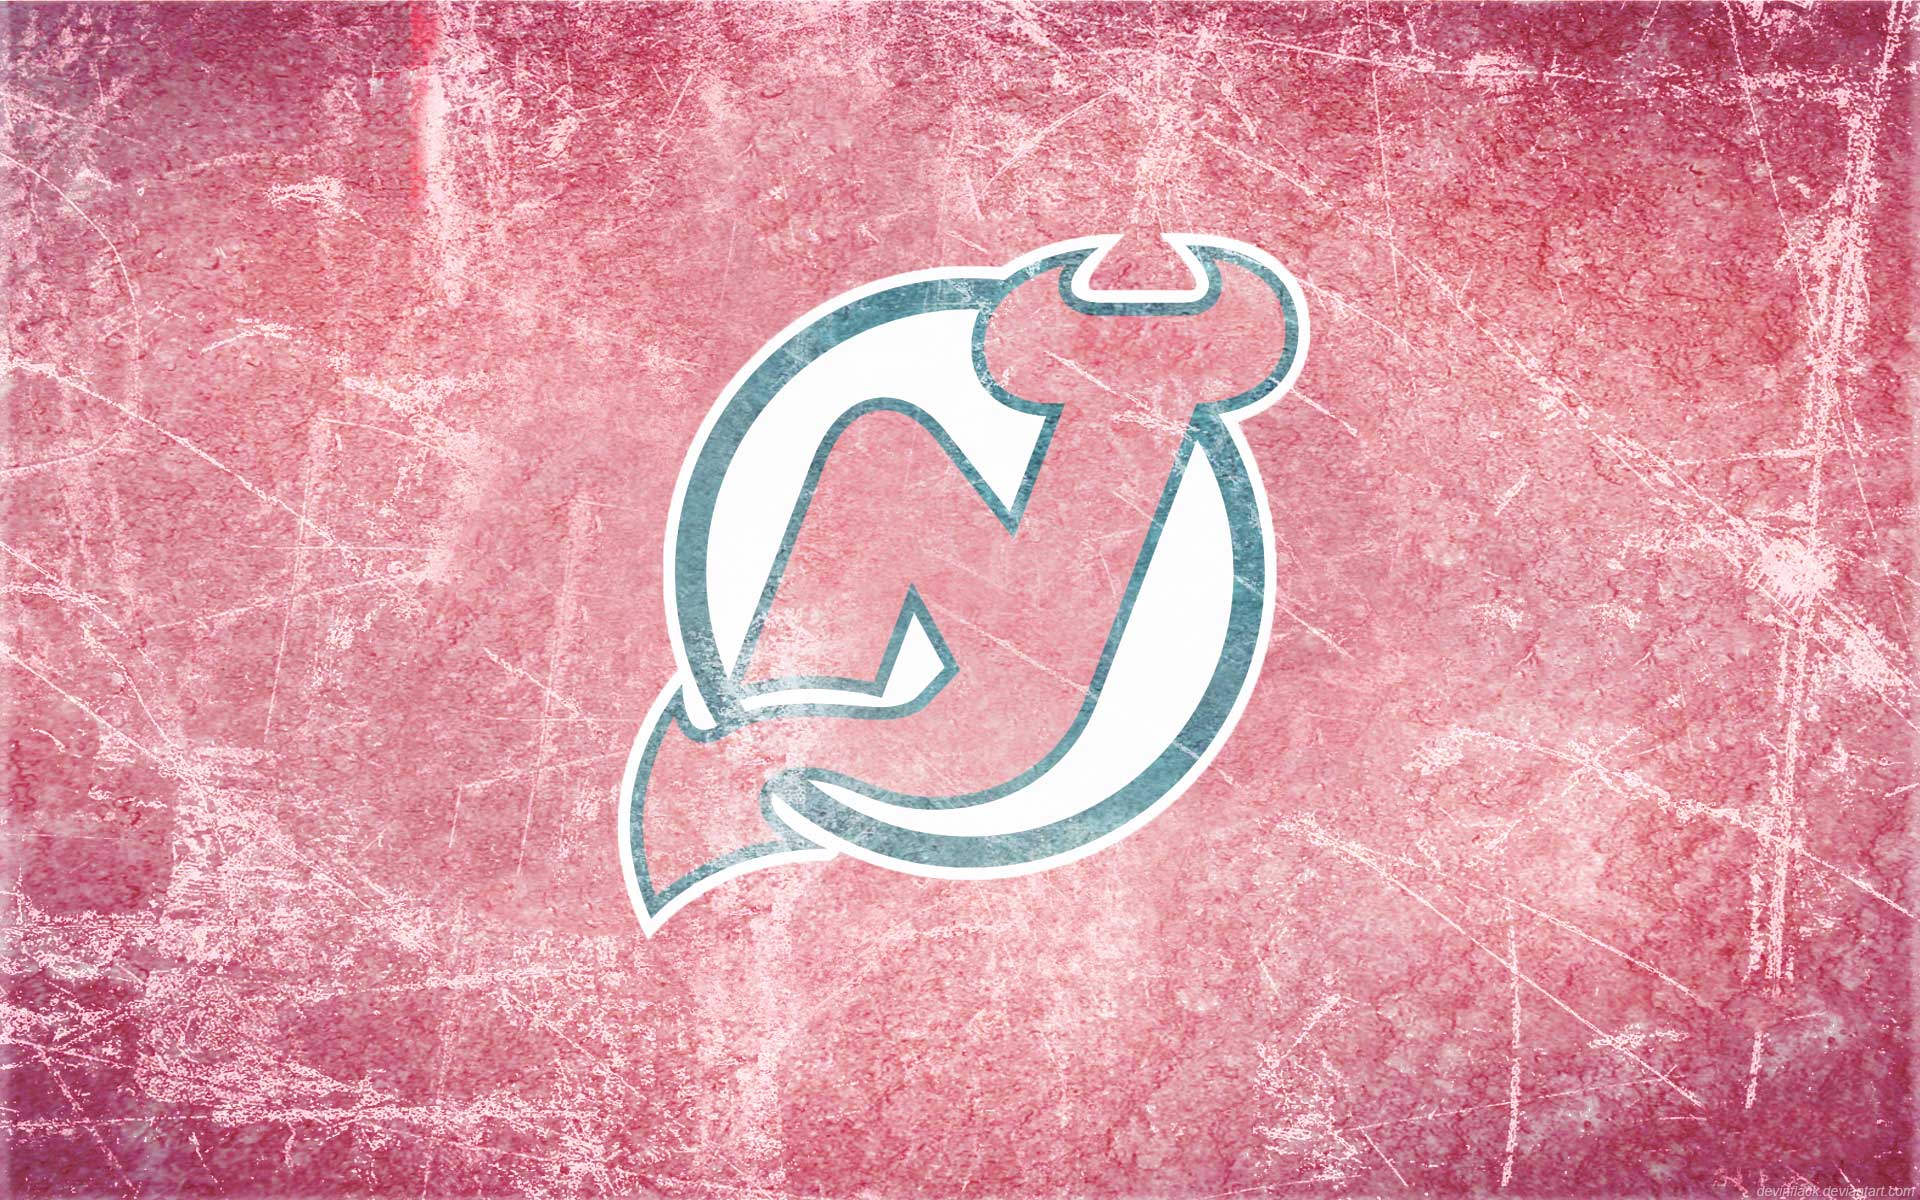 New Jersey Devils Nhl Team Wallpaper